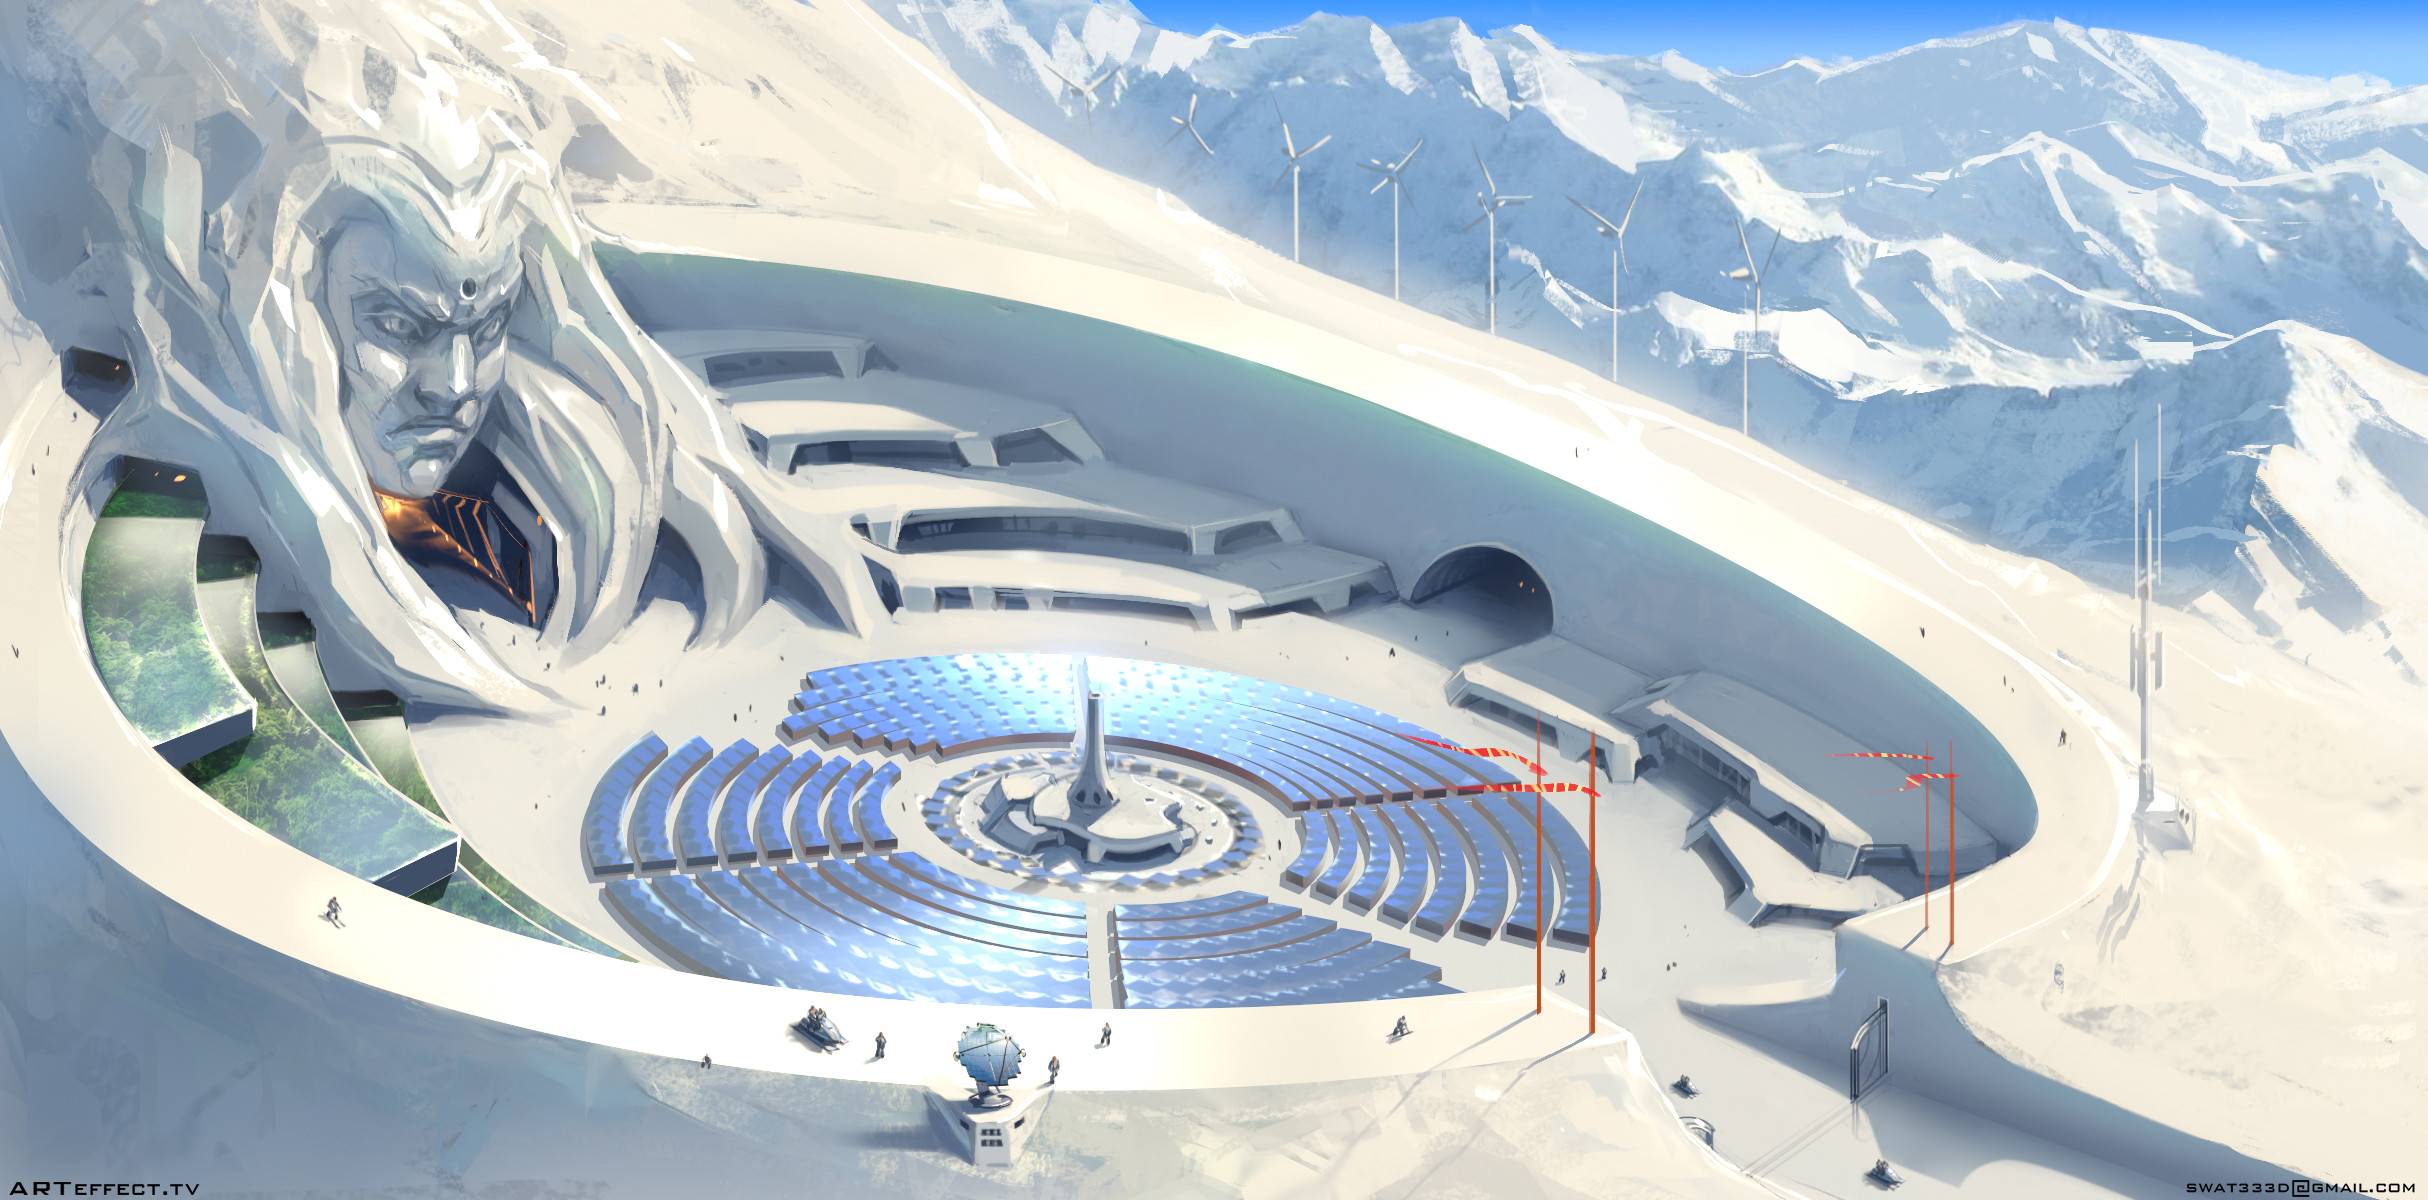 General 2428x1200 digital art snow mountains illustration landscape science fiction concept art solar panel windmill Ski